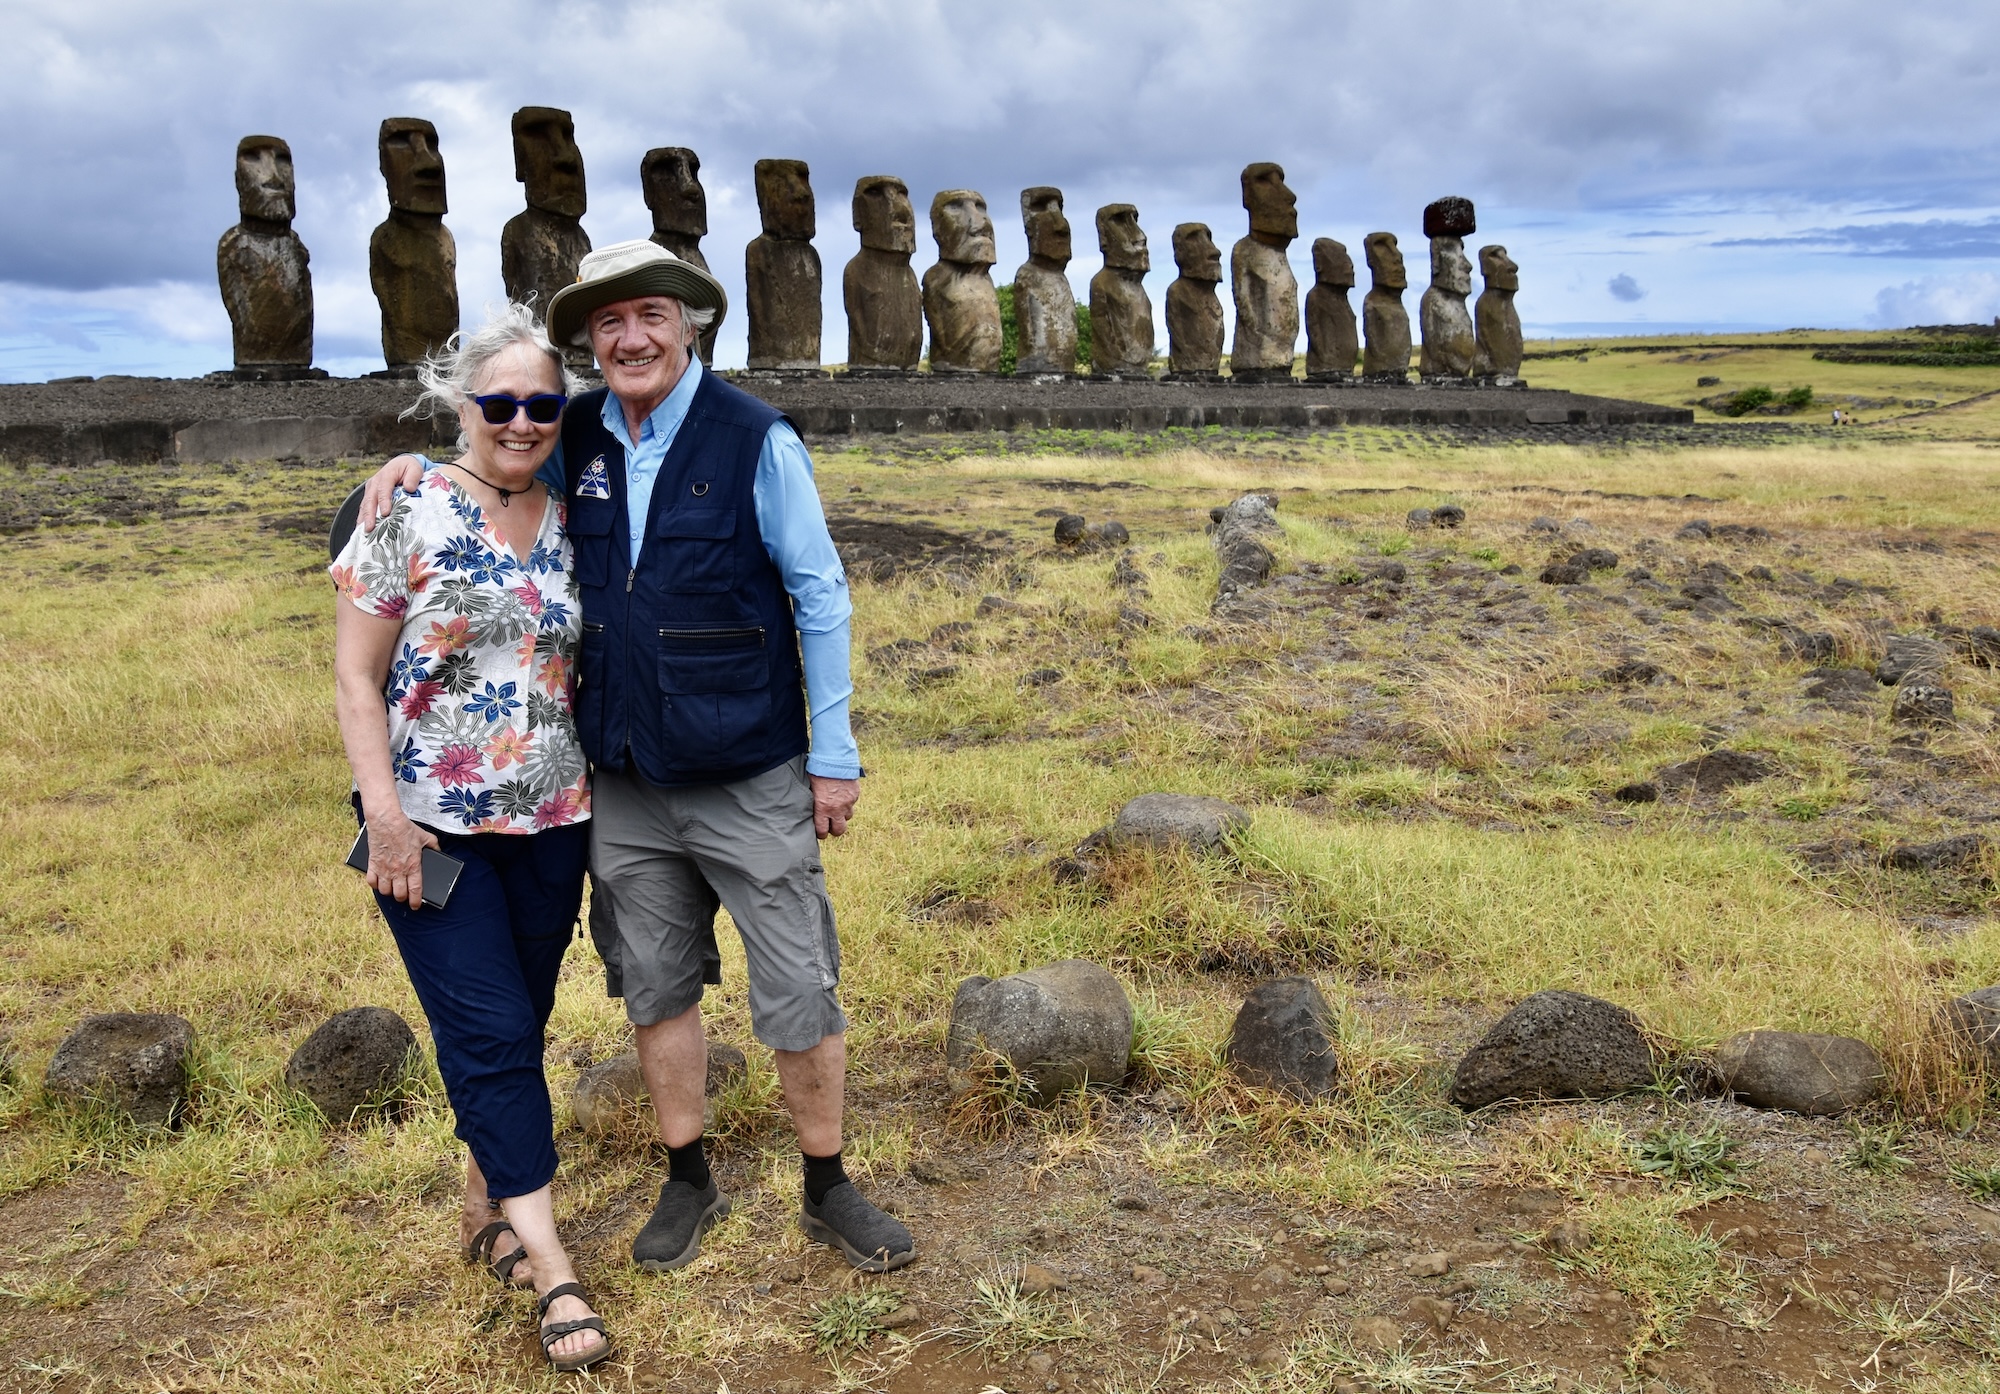 At Tongariki, Easter Island, Chile